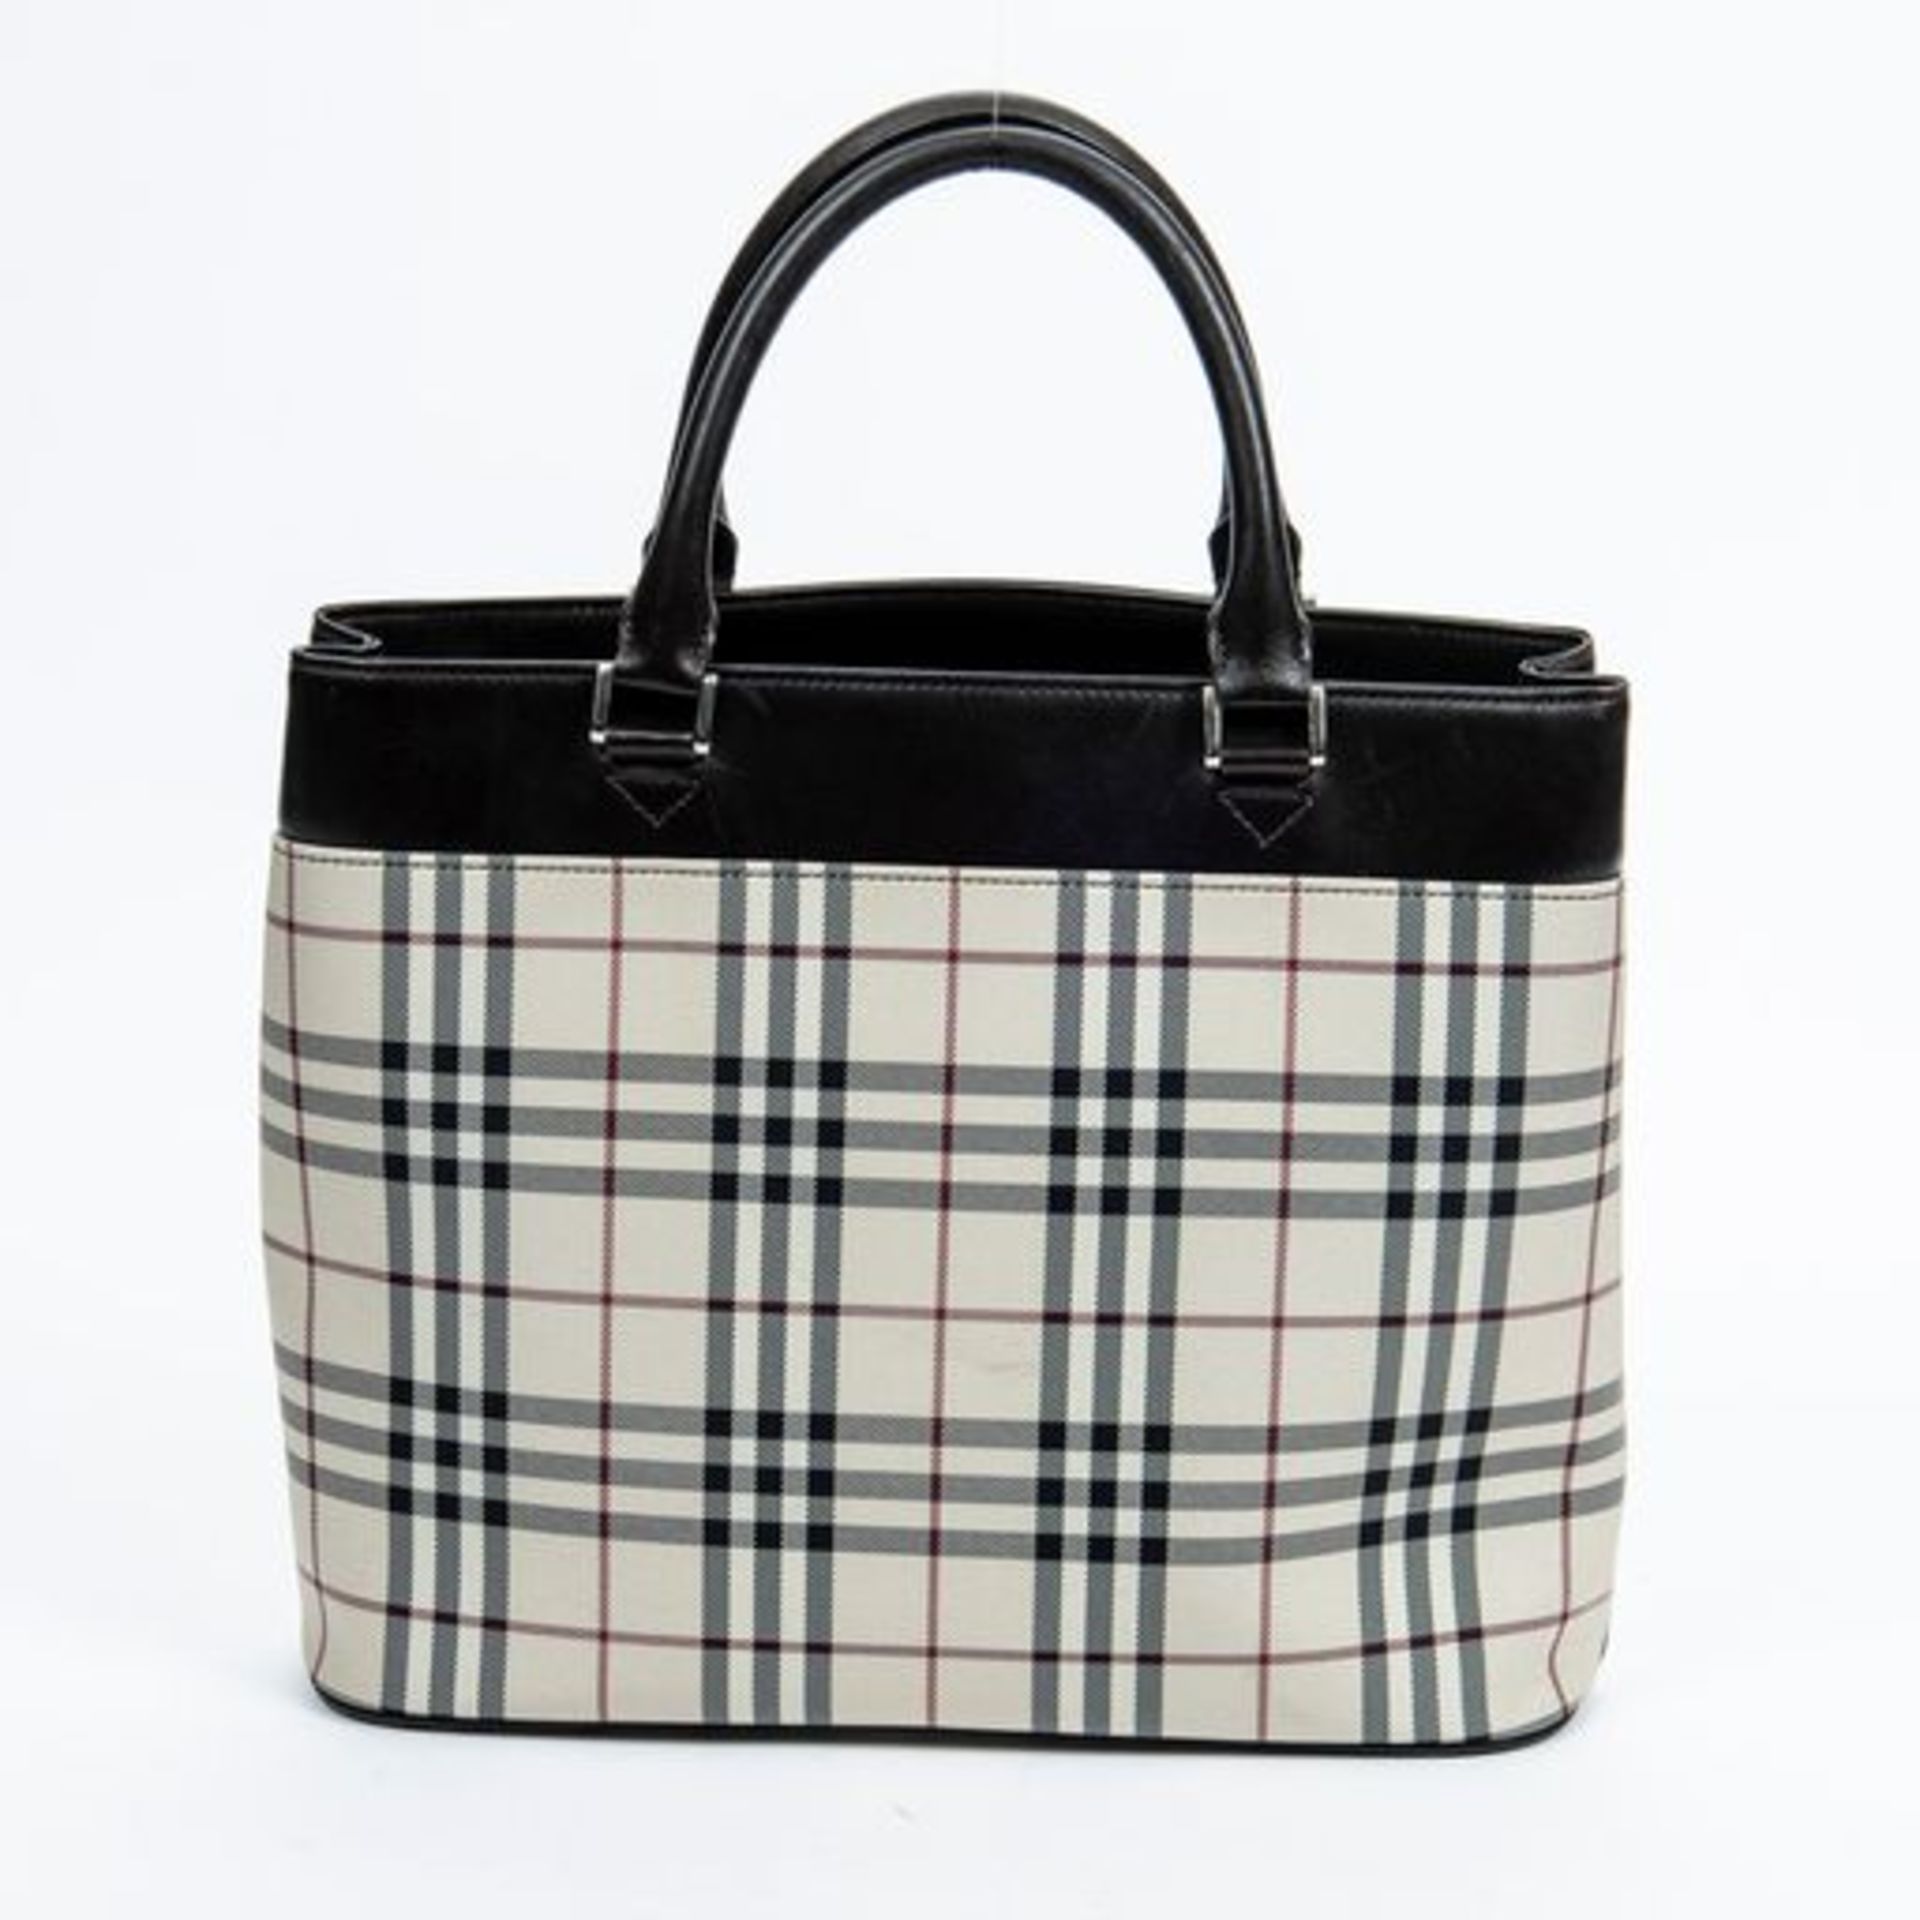 RRP £975.00 Lot To Contain 1 Burberry Canvas Medium Slip Pocket Tote Handbag In Beige/Dark Brown - - Image 2 of 3